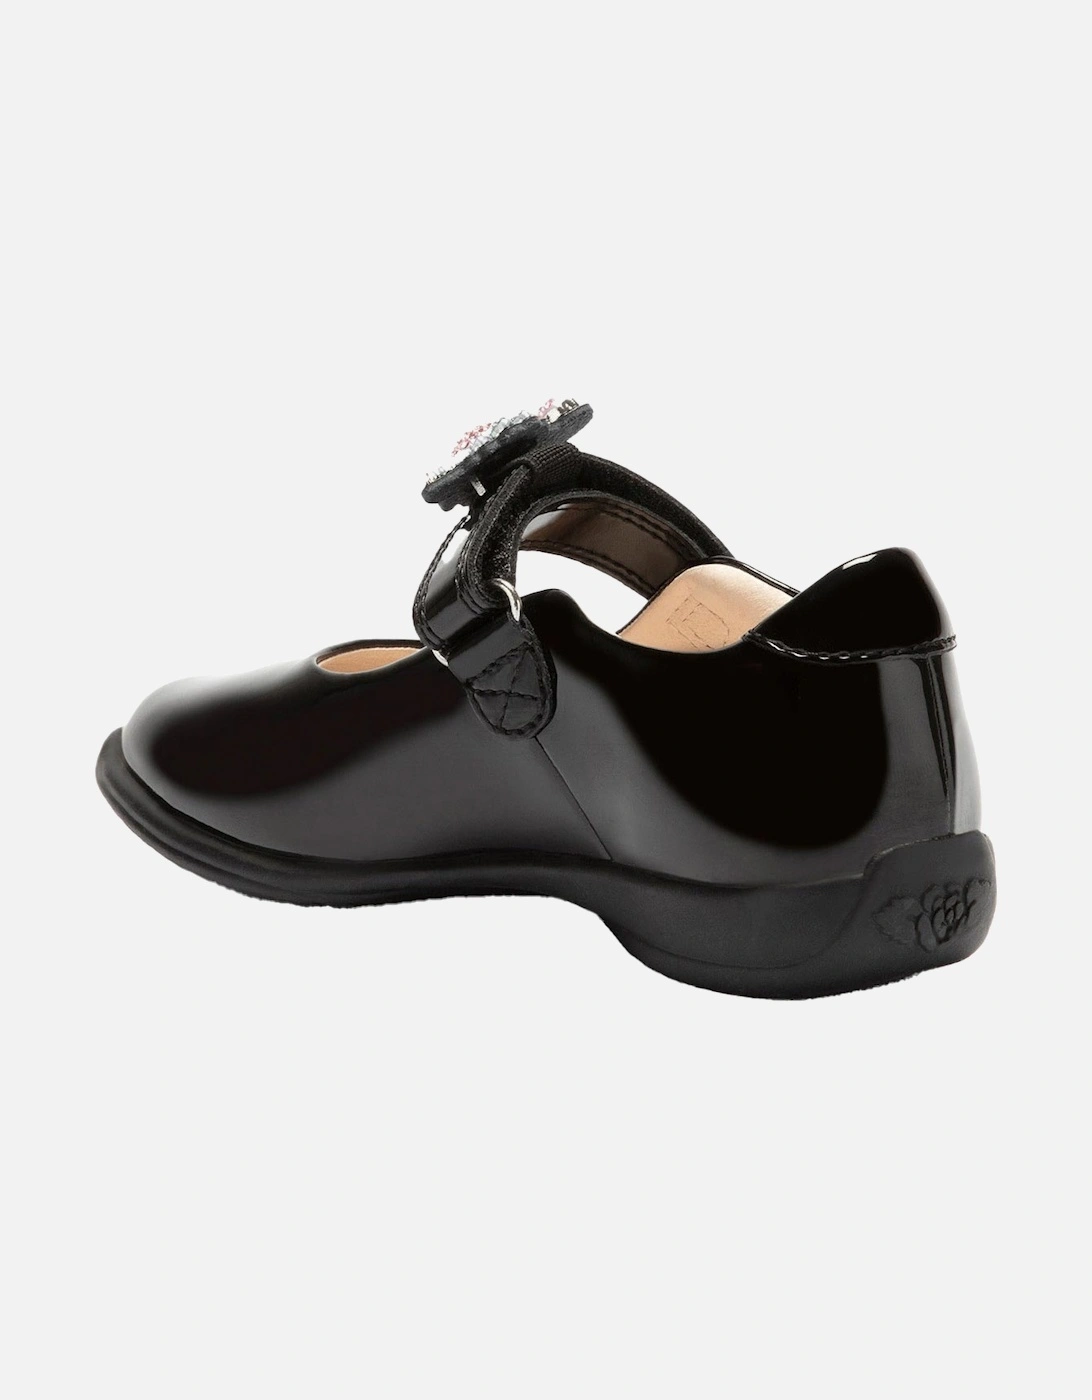 Juniors Patent Dino 2 School Shoes (Black)